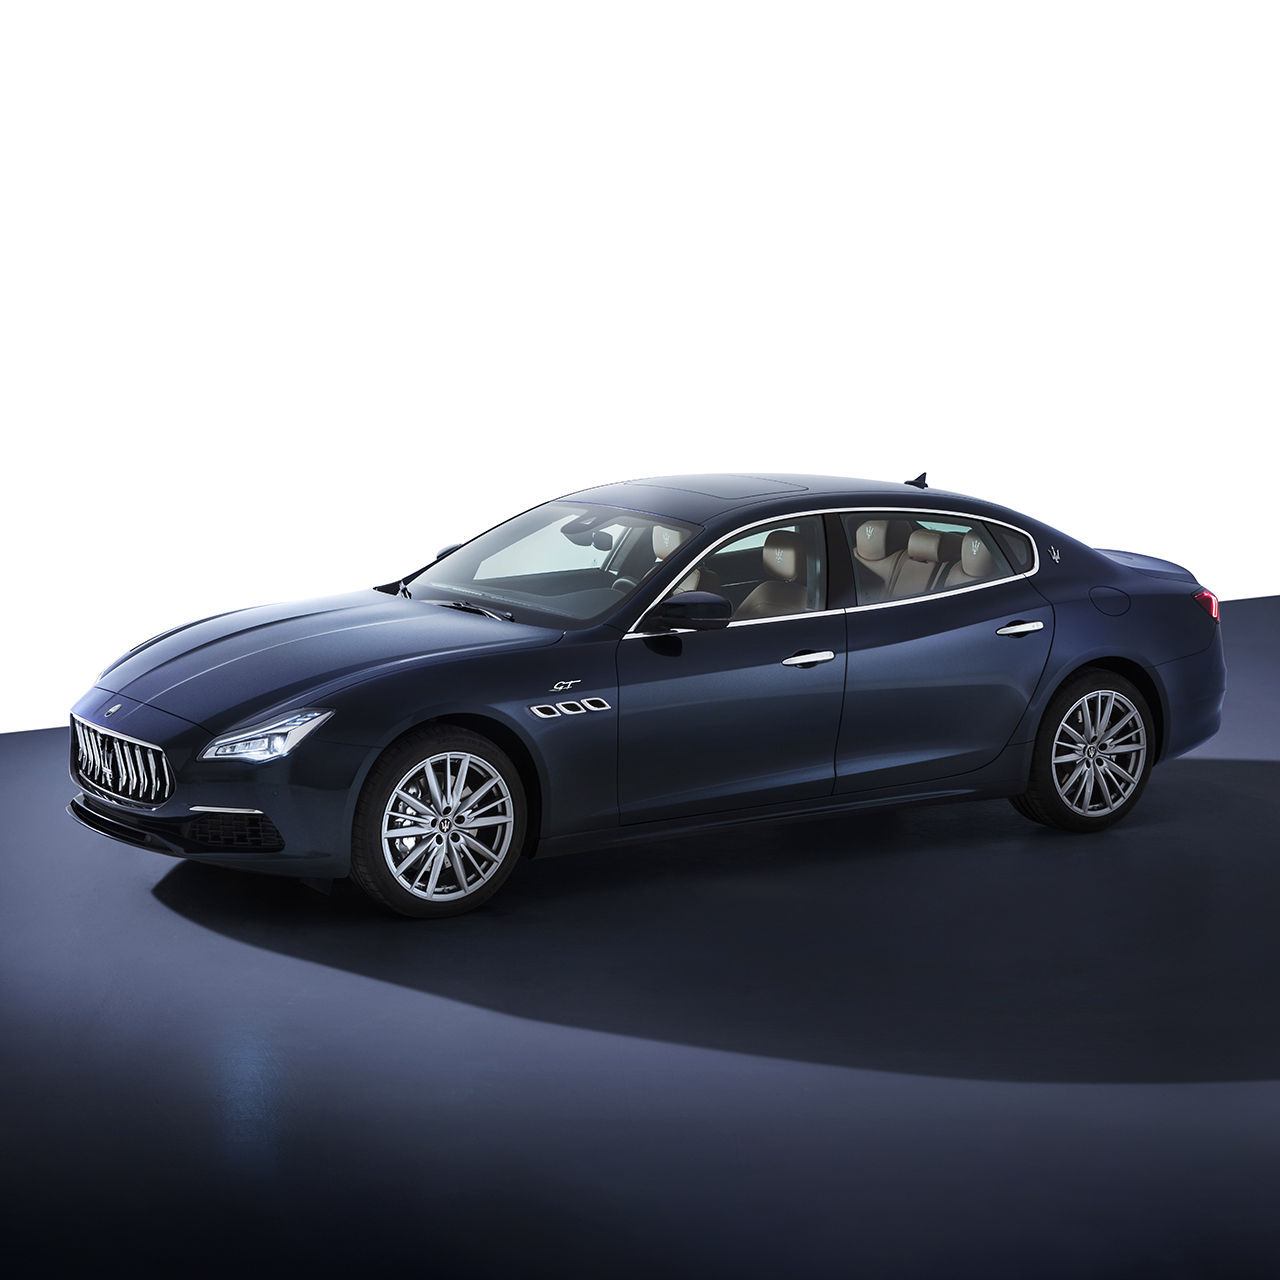 Maserati Models: SUVs, Sports Cars, and Sedans | Maserati USA